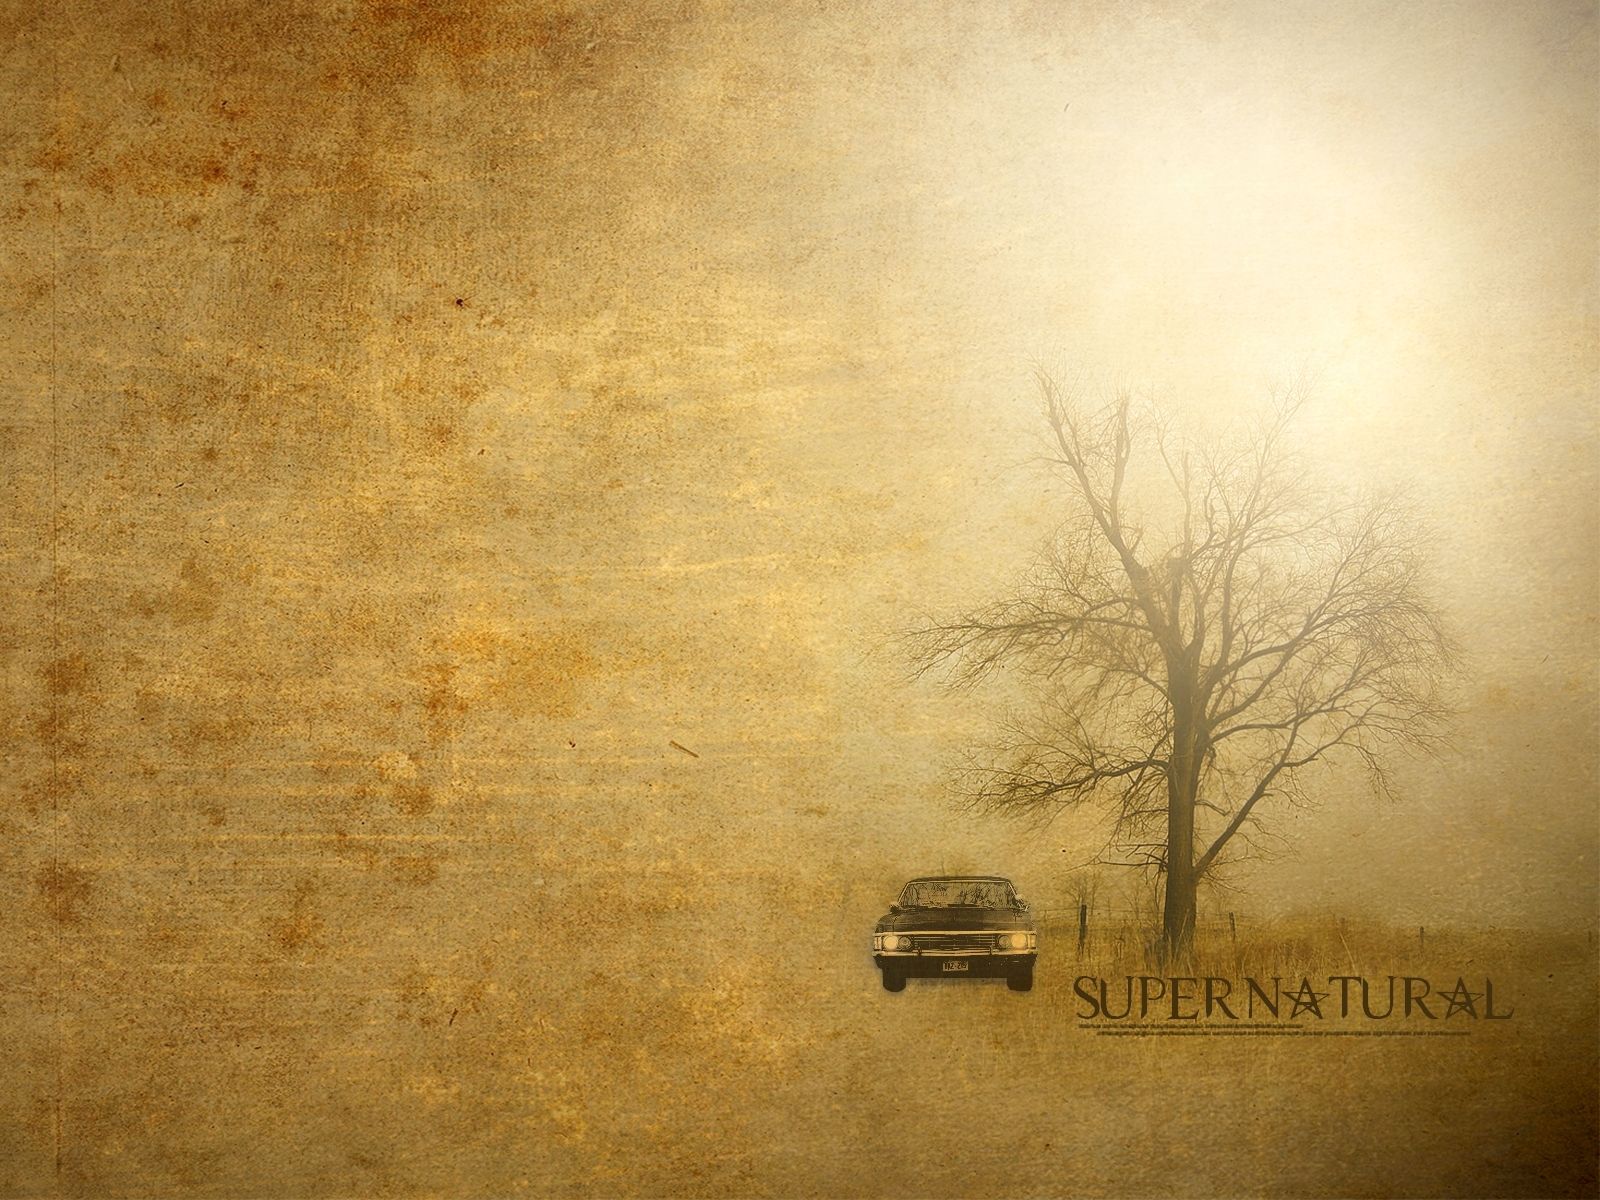 Impala - Supernatural Wallpaper (6688270) - Fanpop